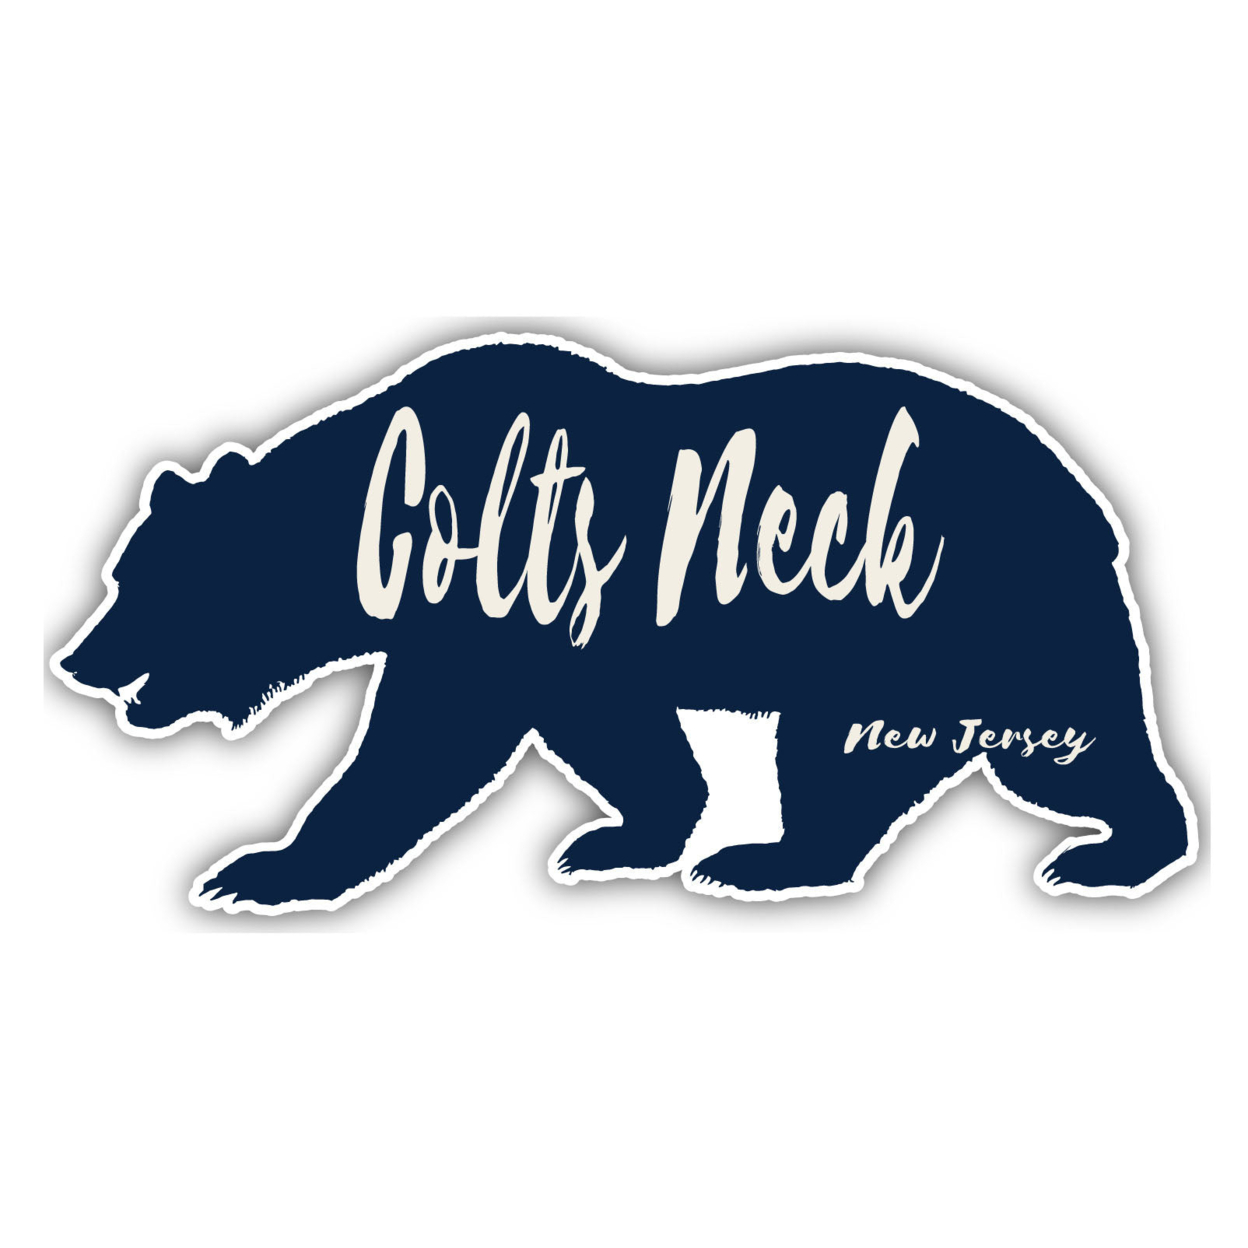 Colts Neck New Jersey Souvenir Decorative Stickers (Choose Theme And Size) - Single Unit, 8-Inch, Bear